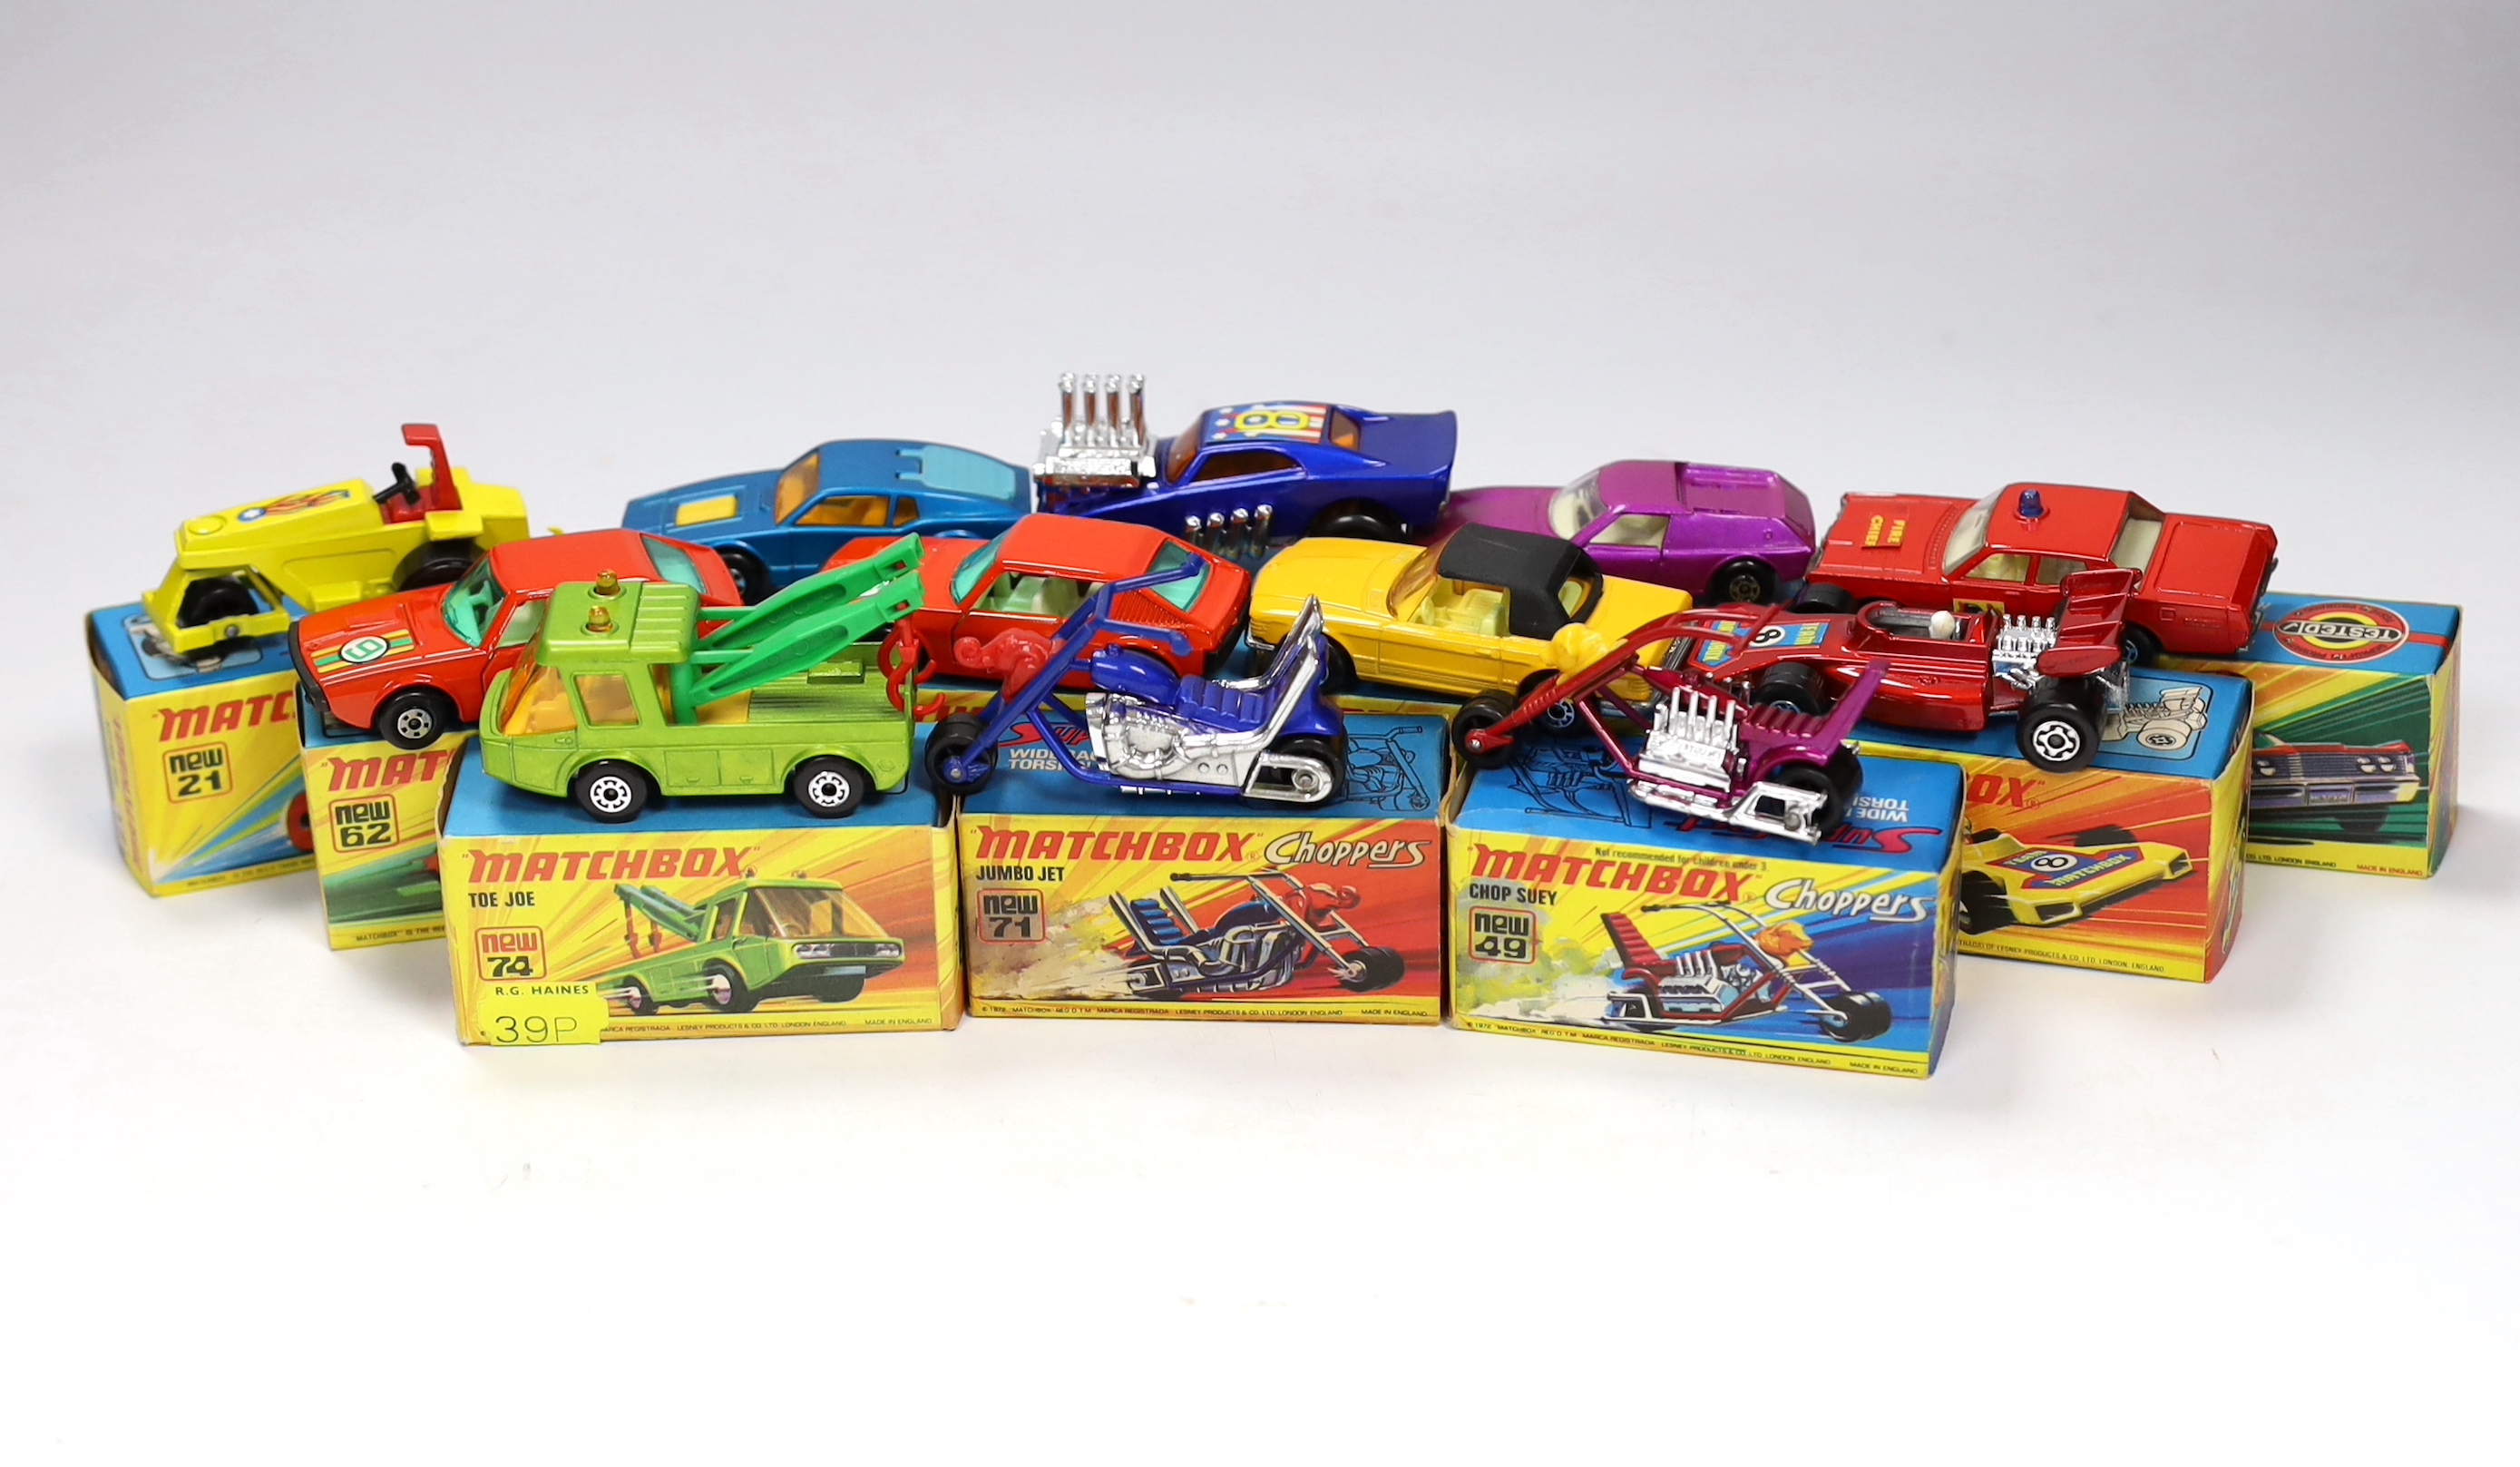 Twelve boxed Matchbox Superfast 1-75 New series diecast vehicles                                                                                                                                                            